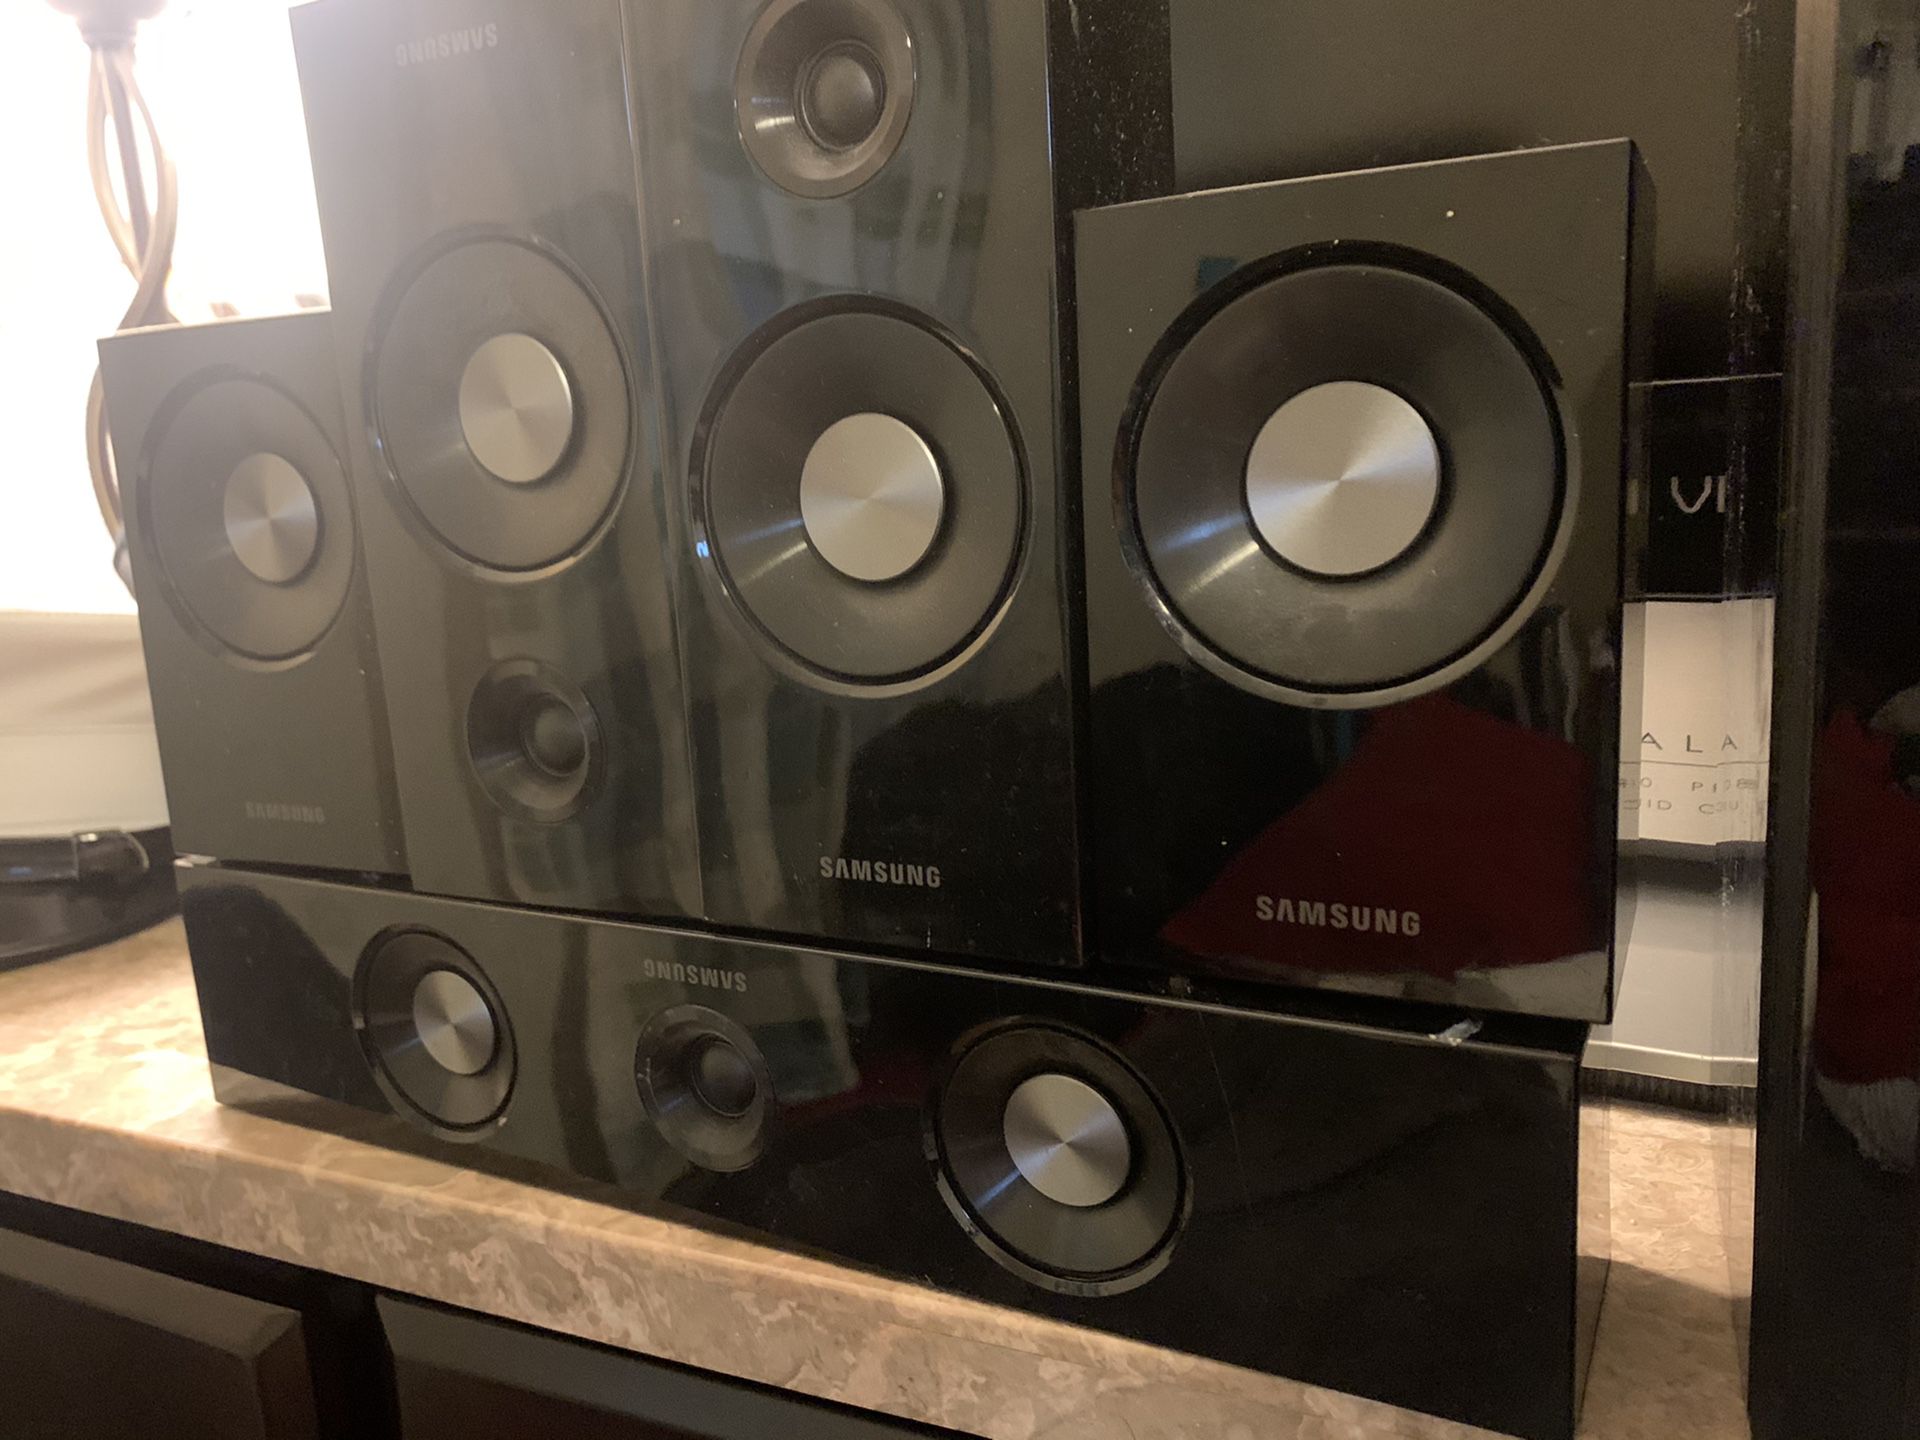 Samsung surround sound speakers 5.1 with subwoofer DVD player set